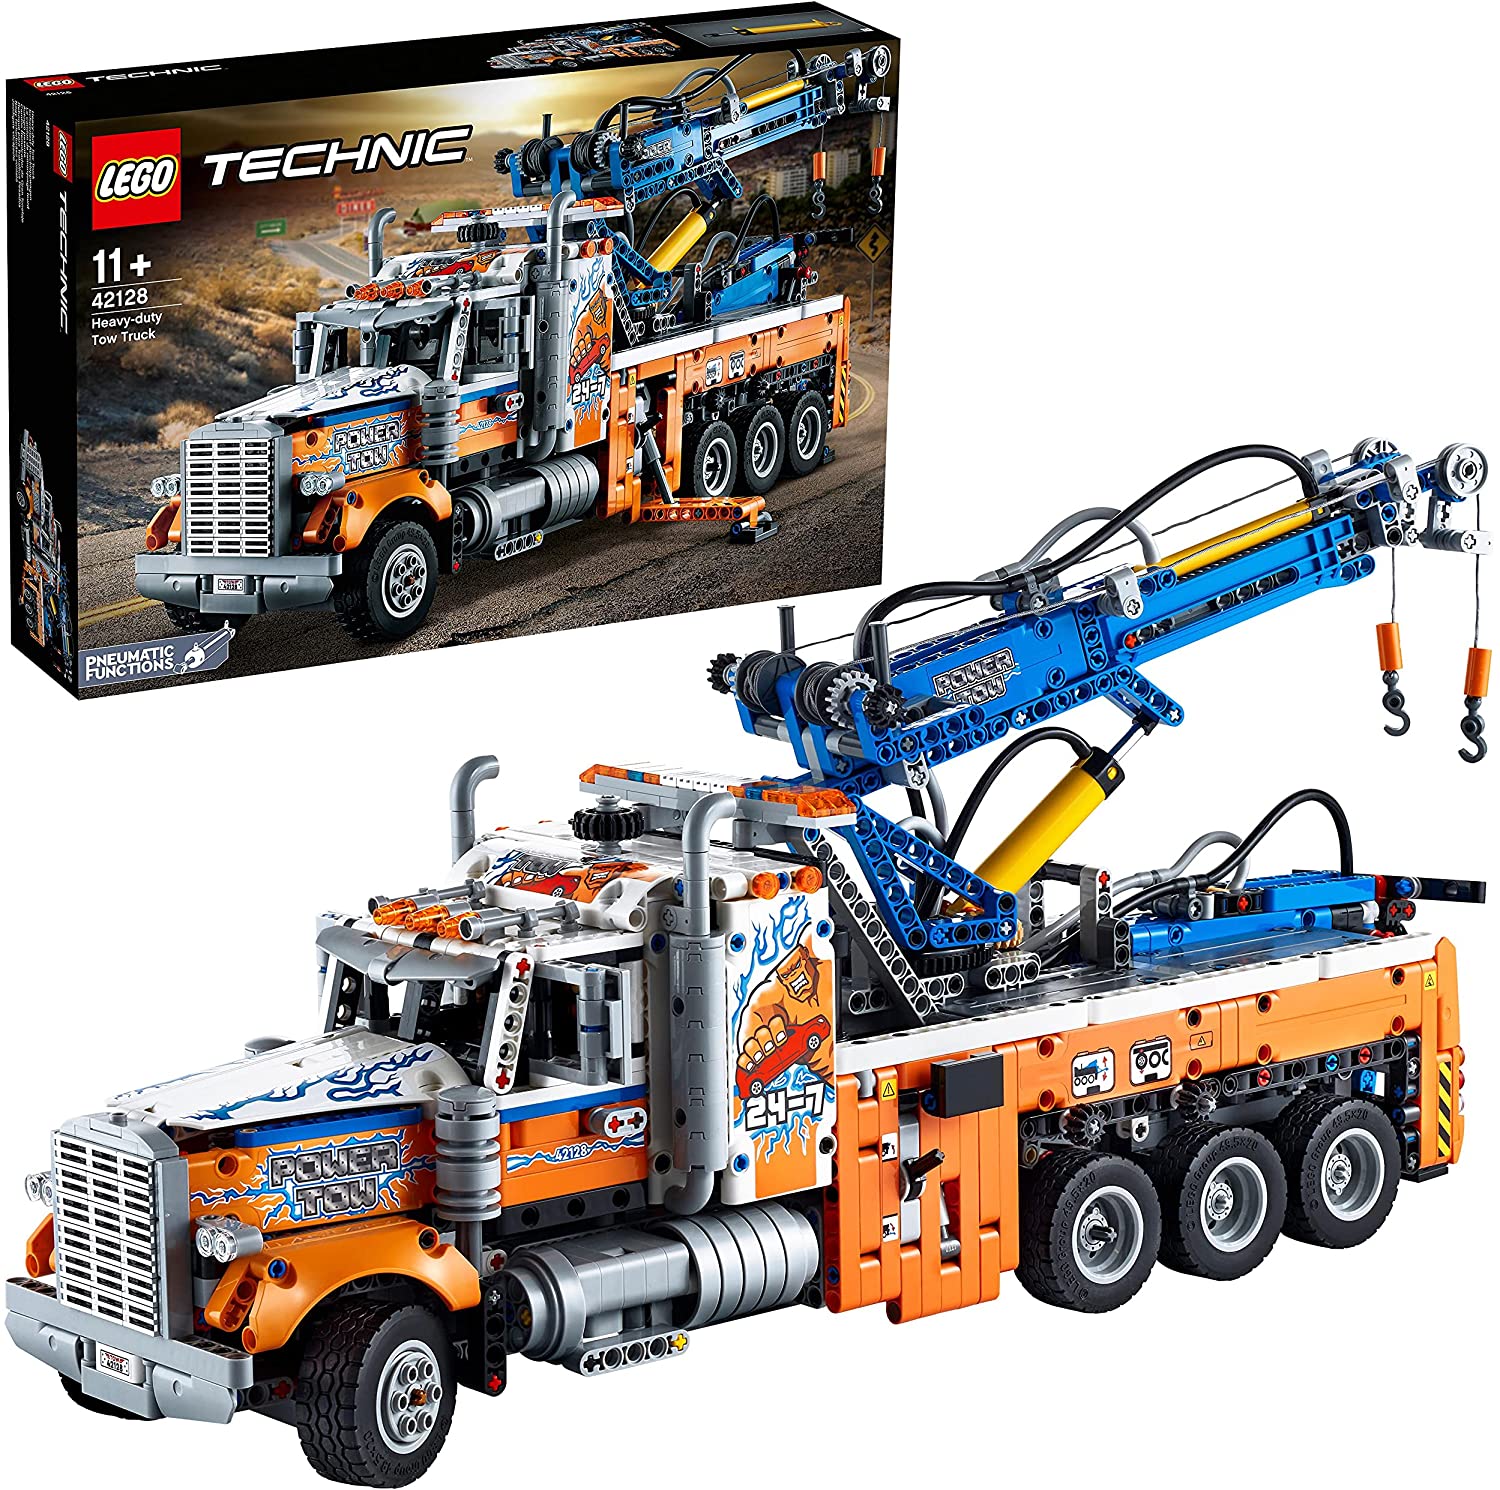 LEGO 42128 Technic Heavy Duty Tow Truck, Model Kit, Technology for Kids, Cr